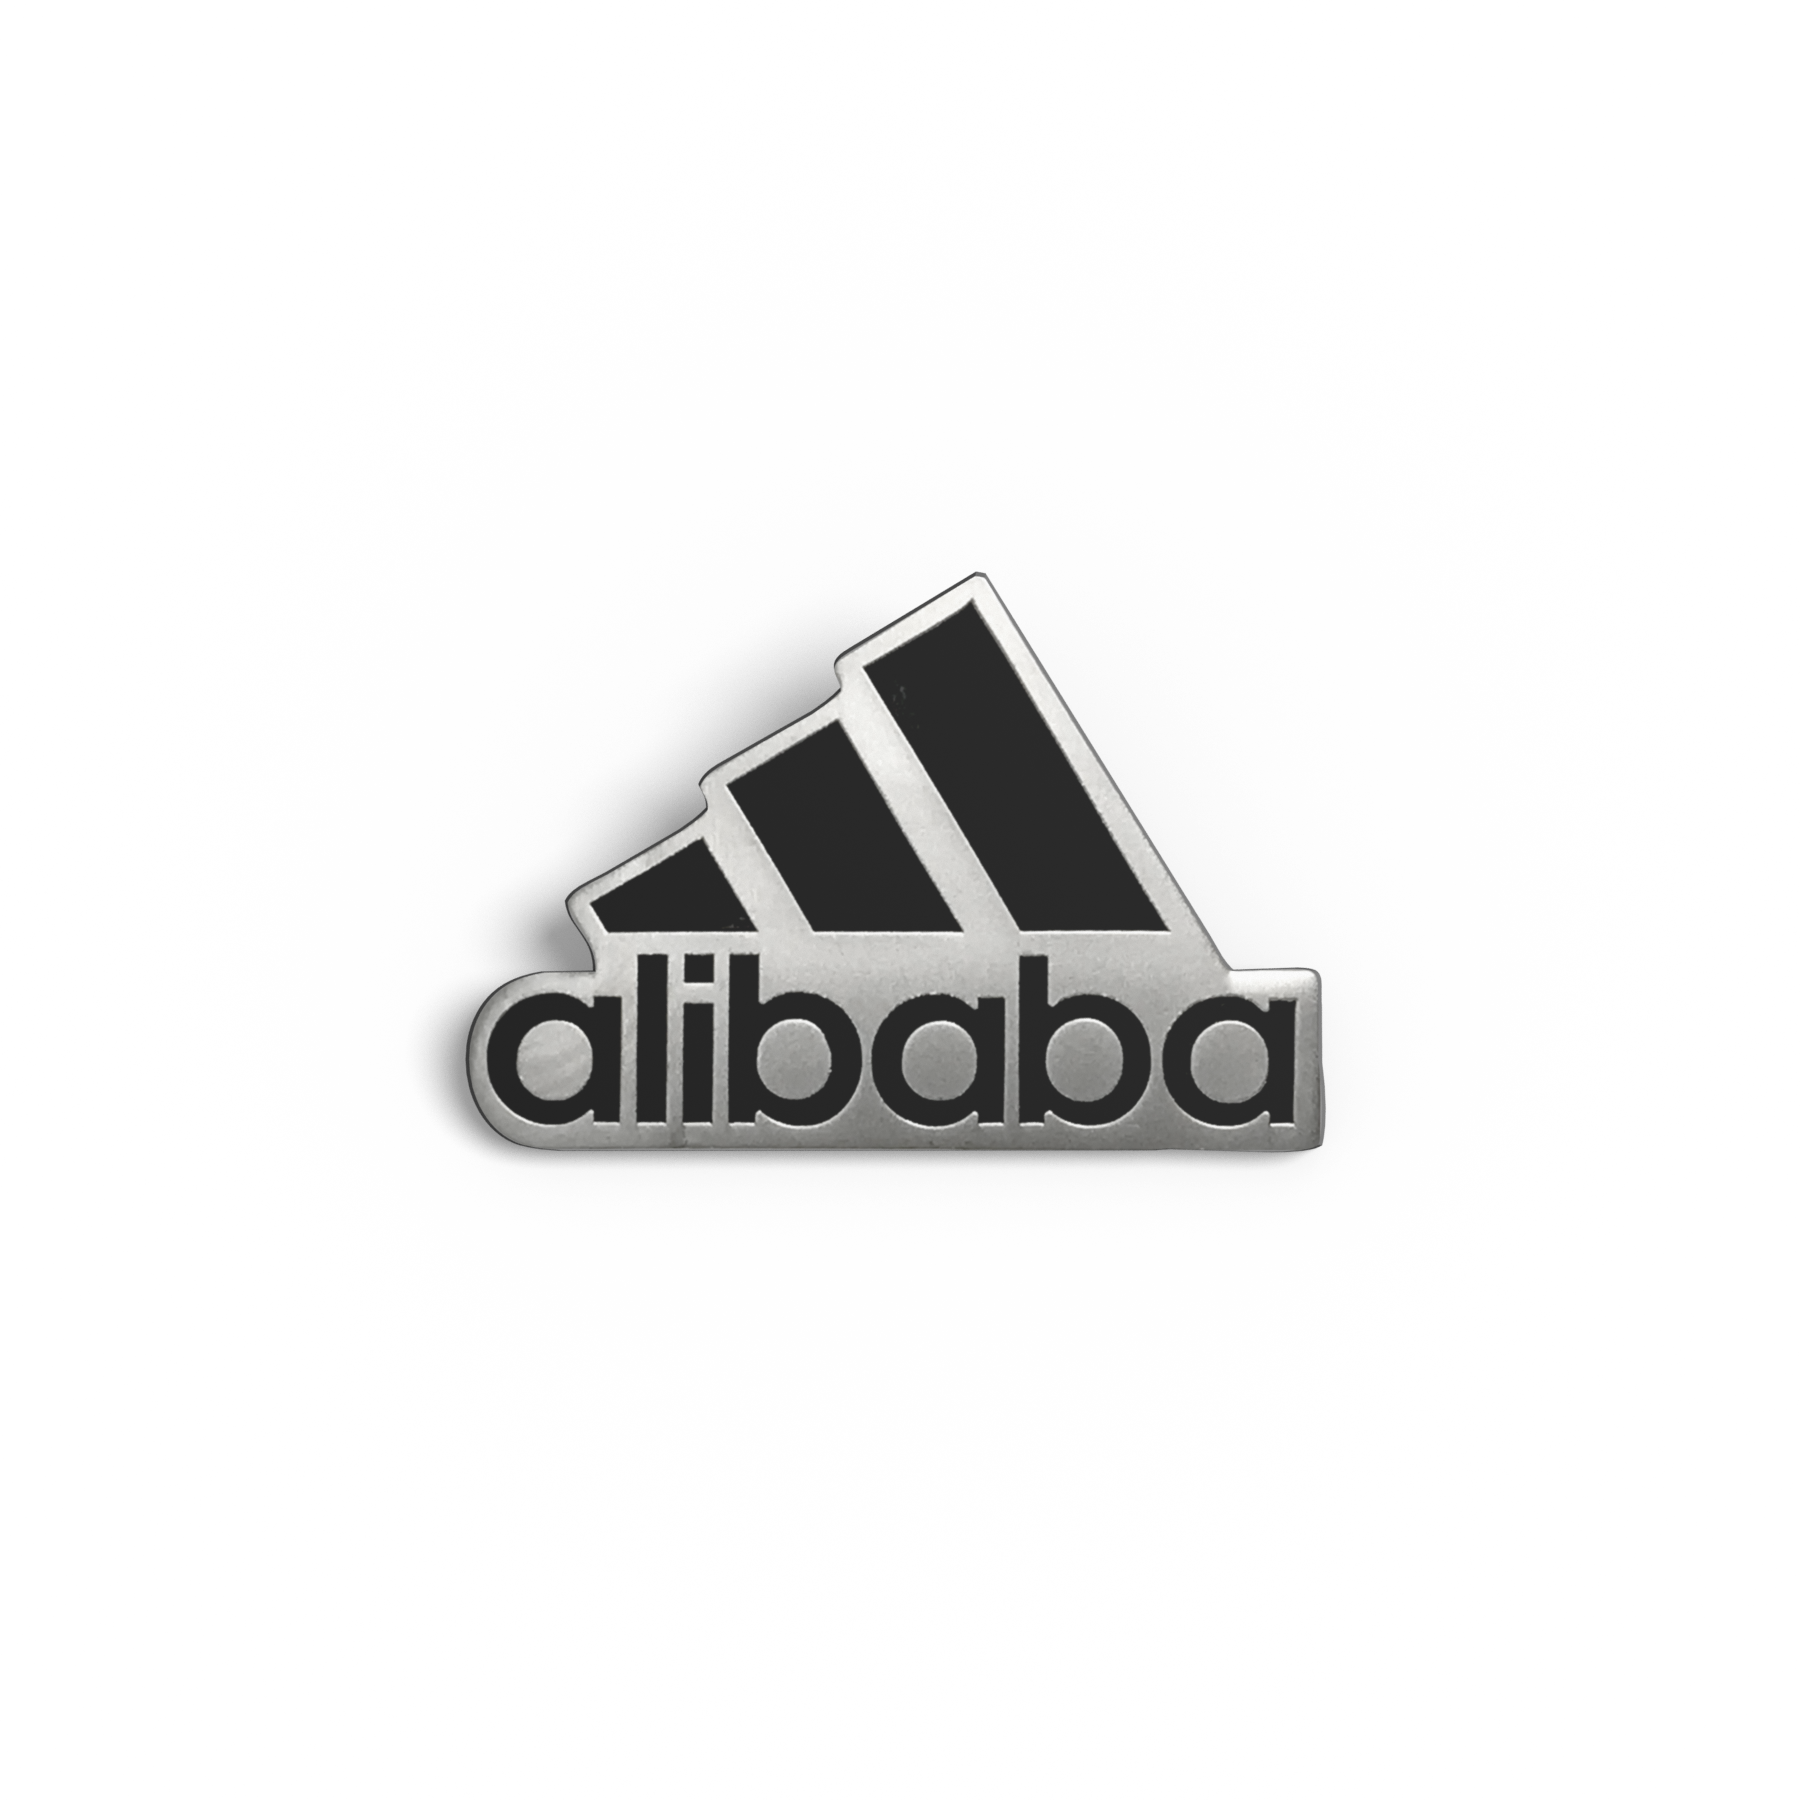 Alibaba enamel – PSA Press